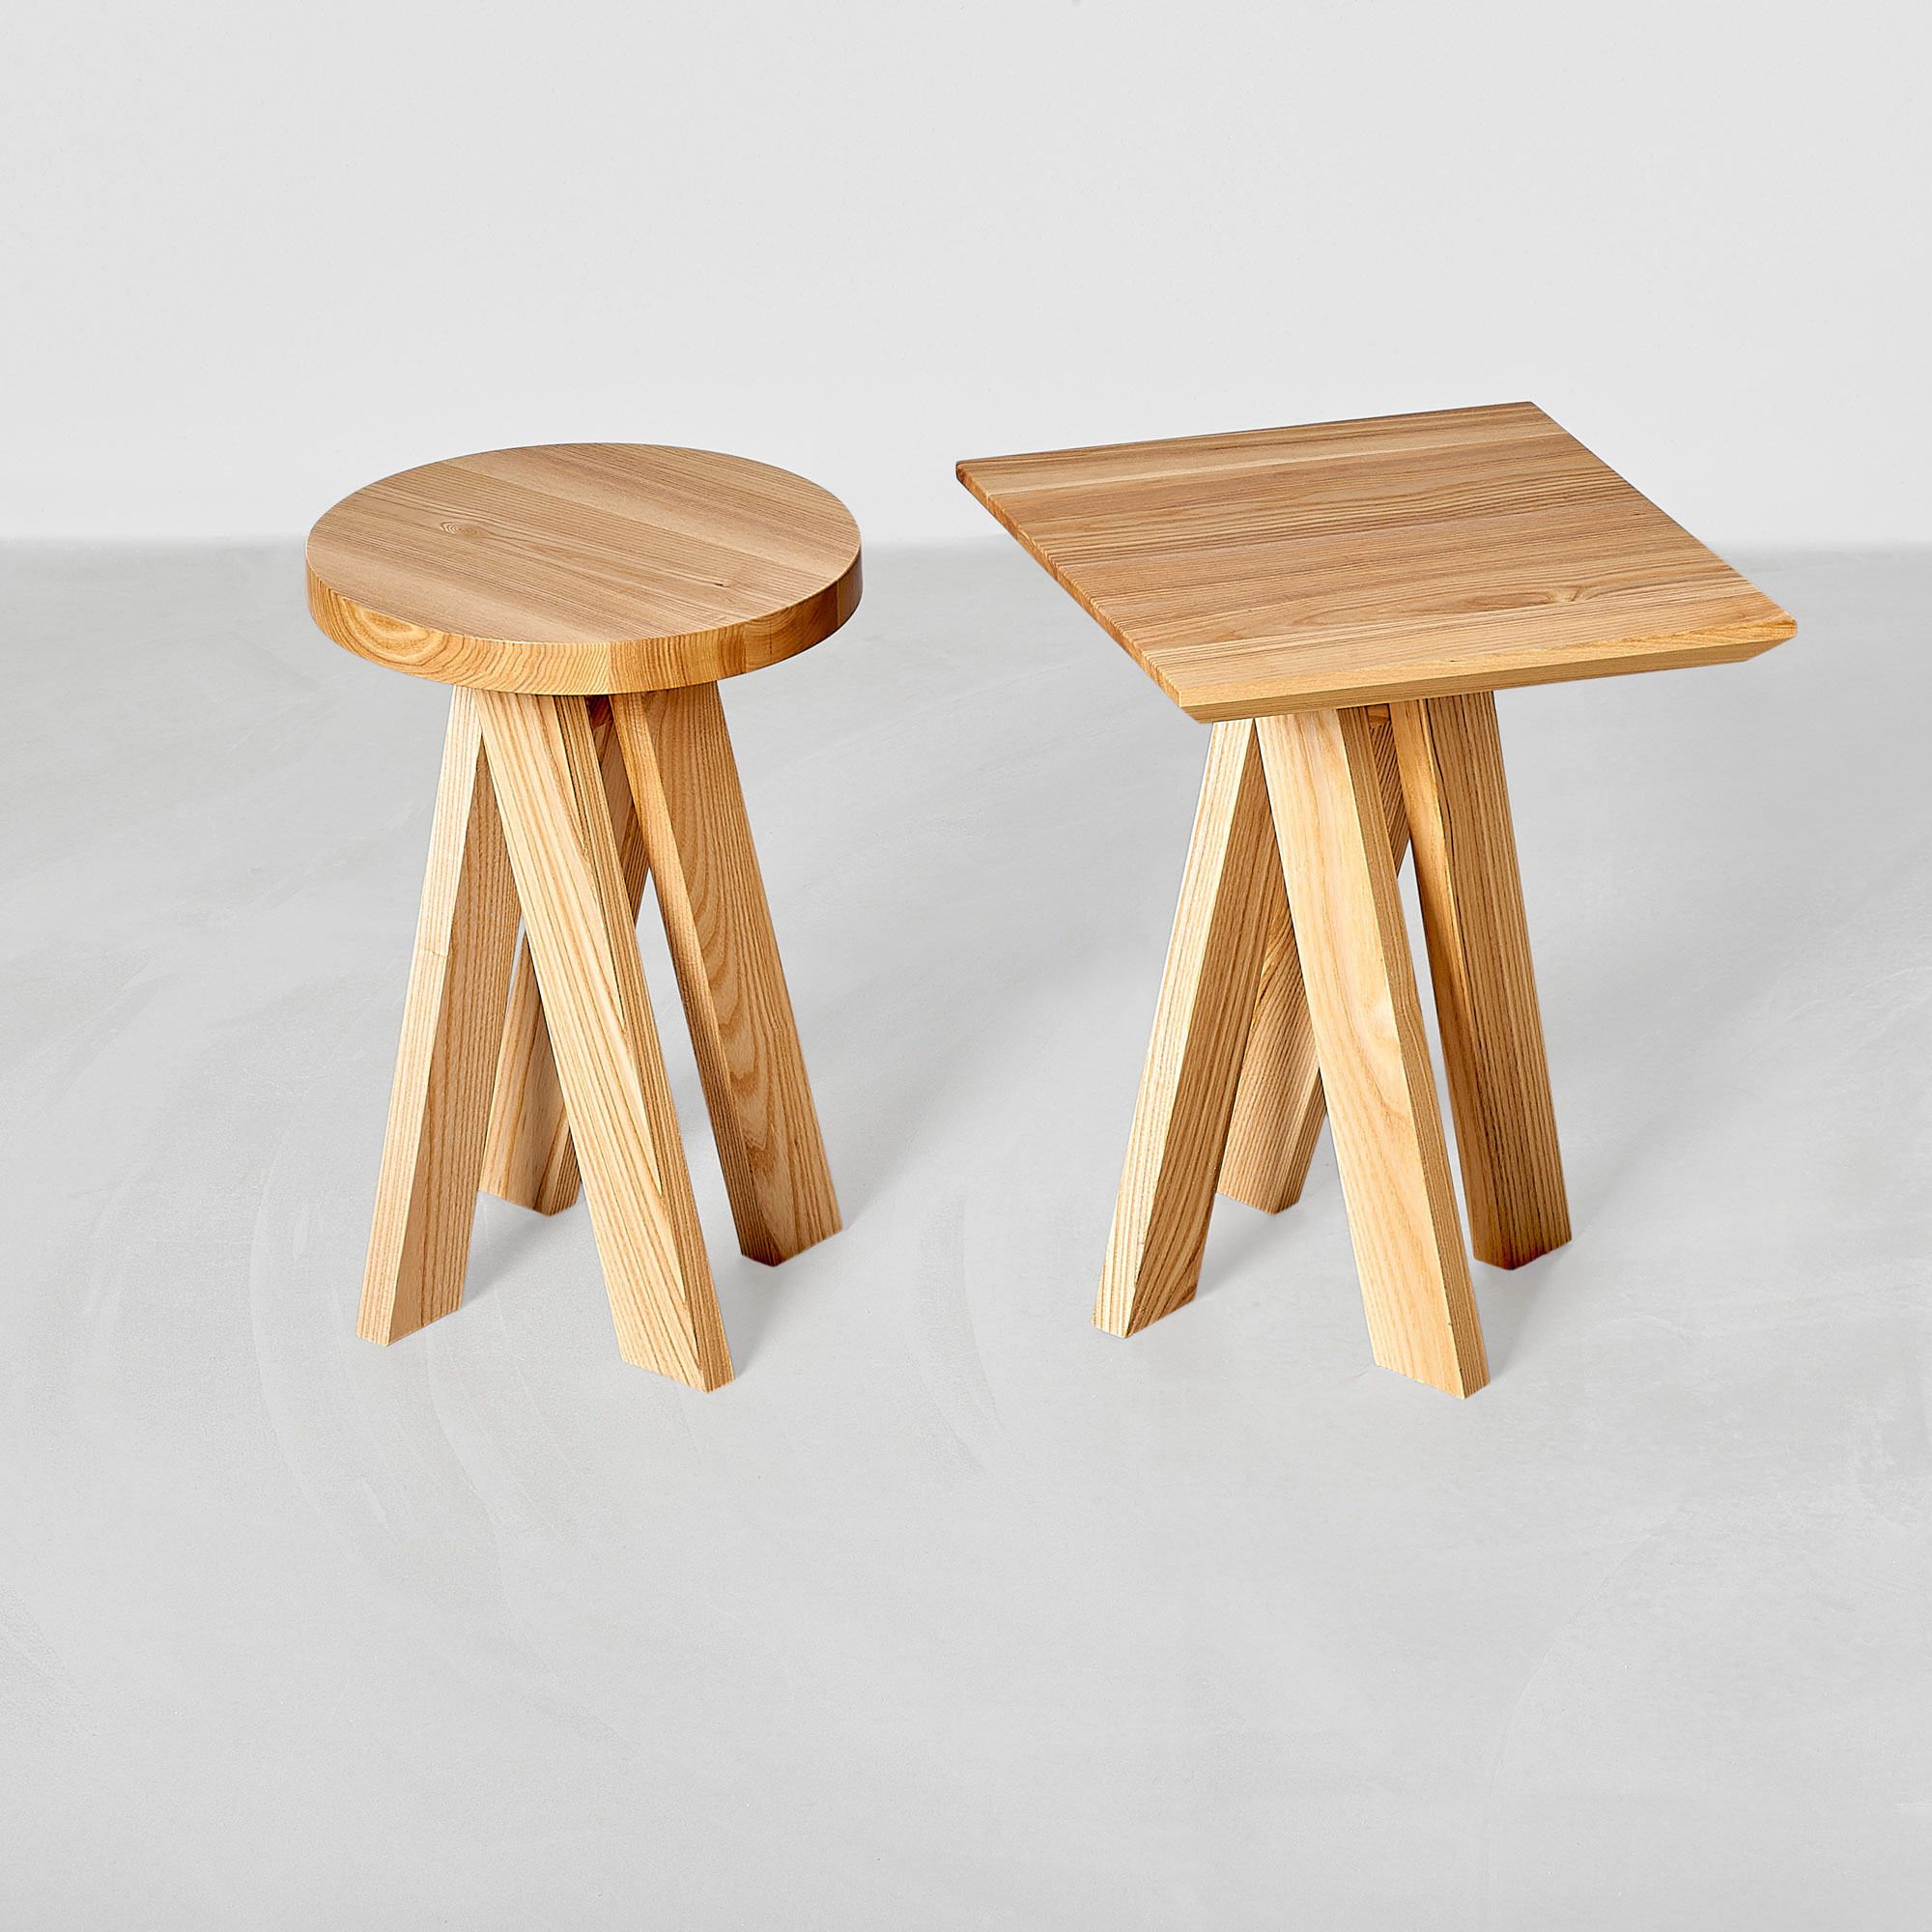 Designer Coffee Table ZIRKEL QG Zirkel4728 custom made in solid wood by vitamin design